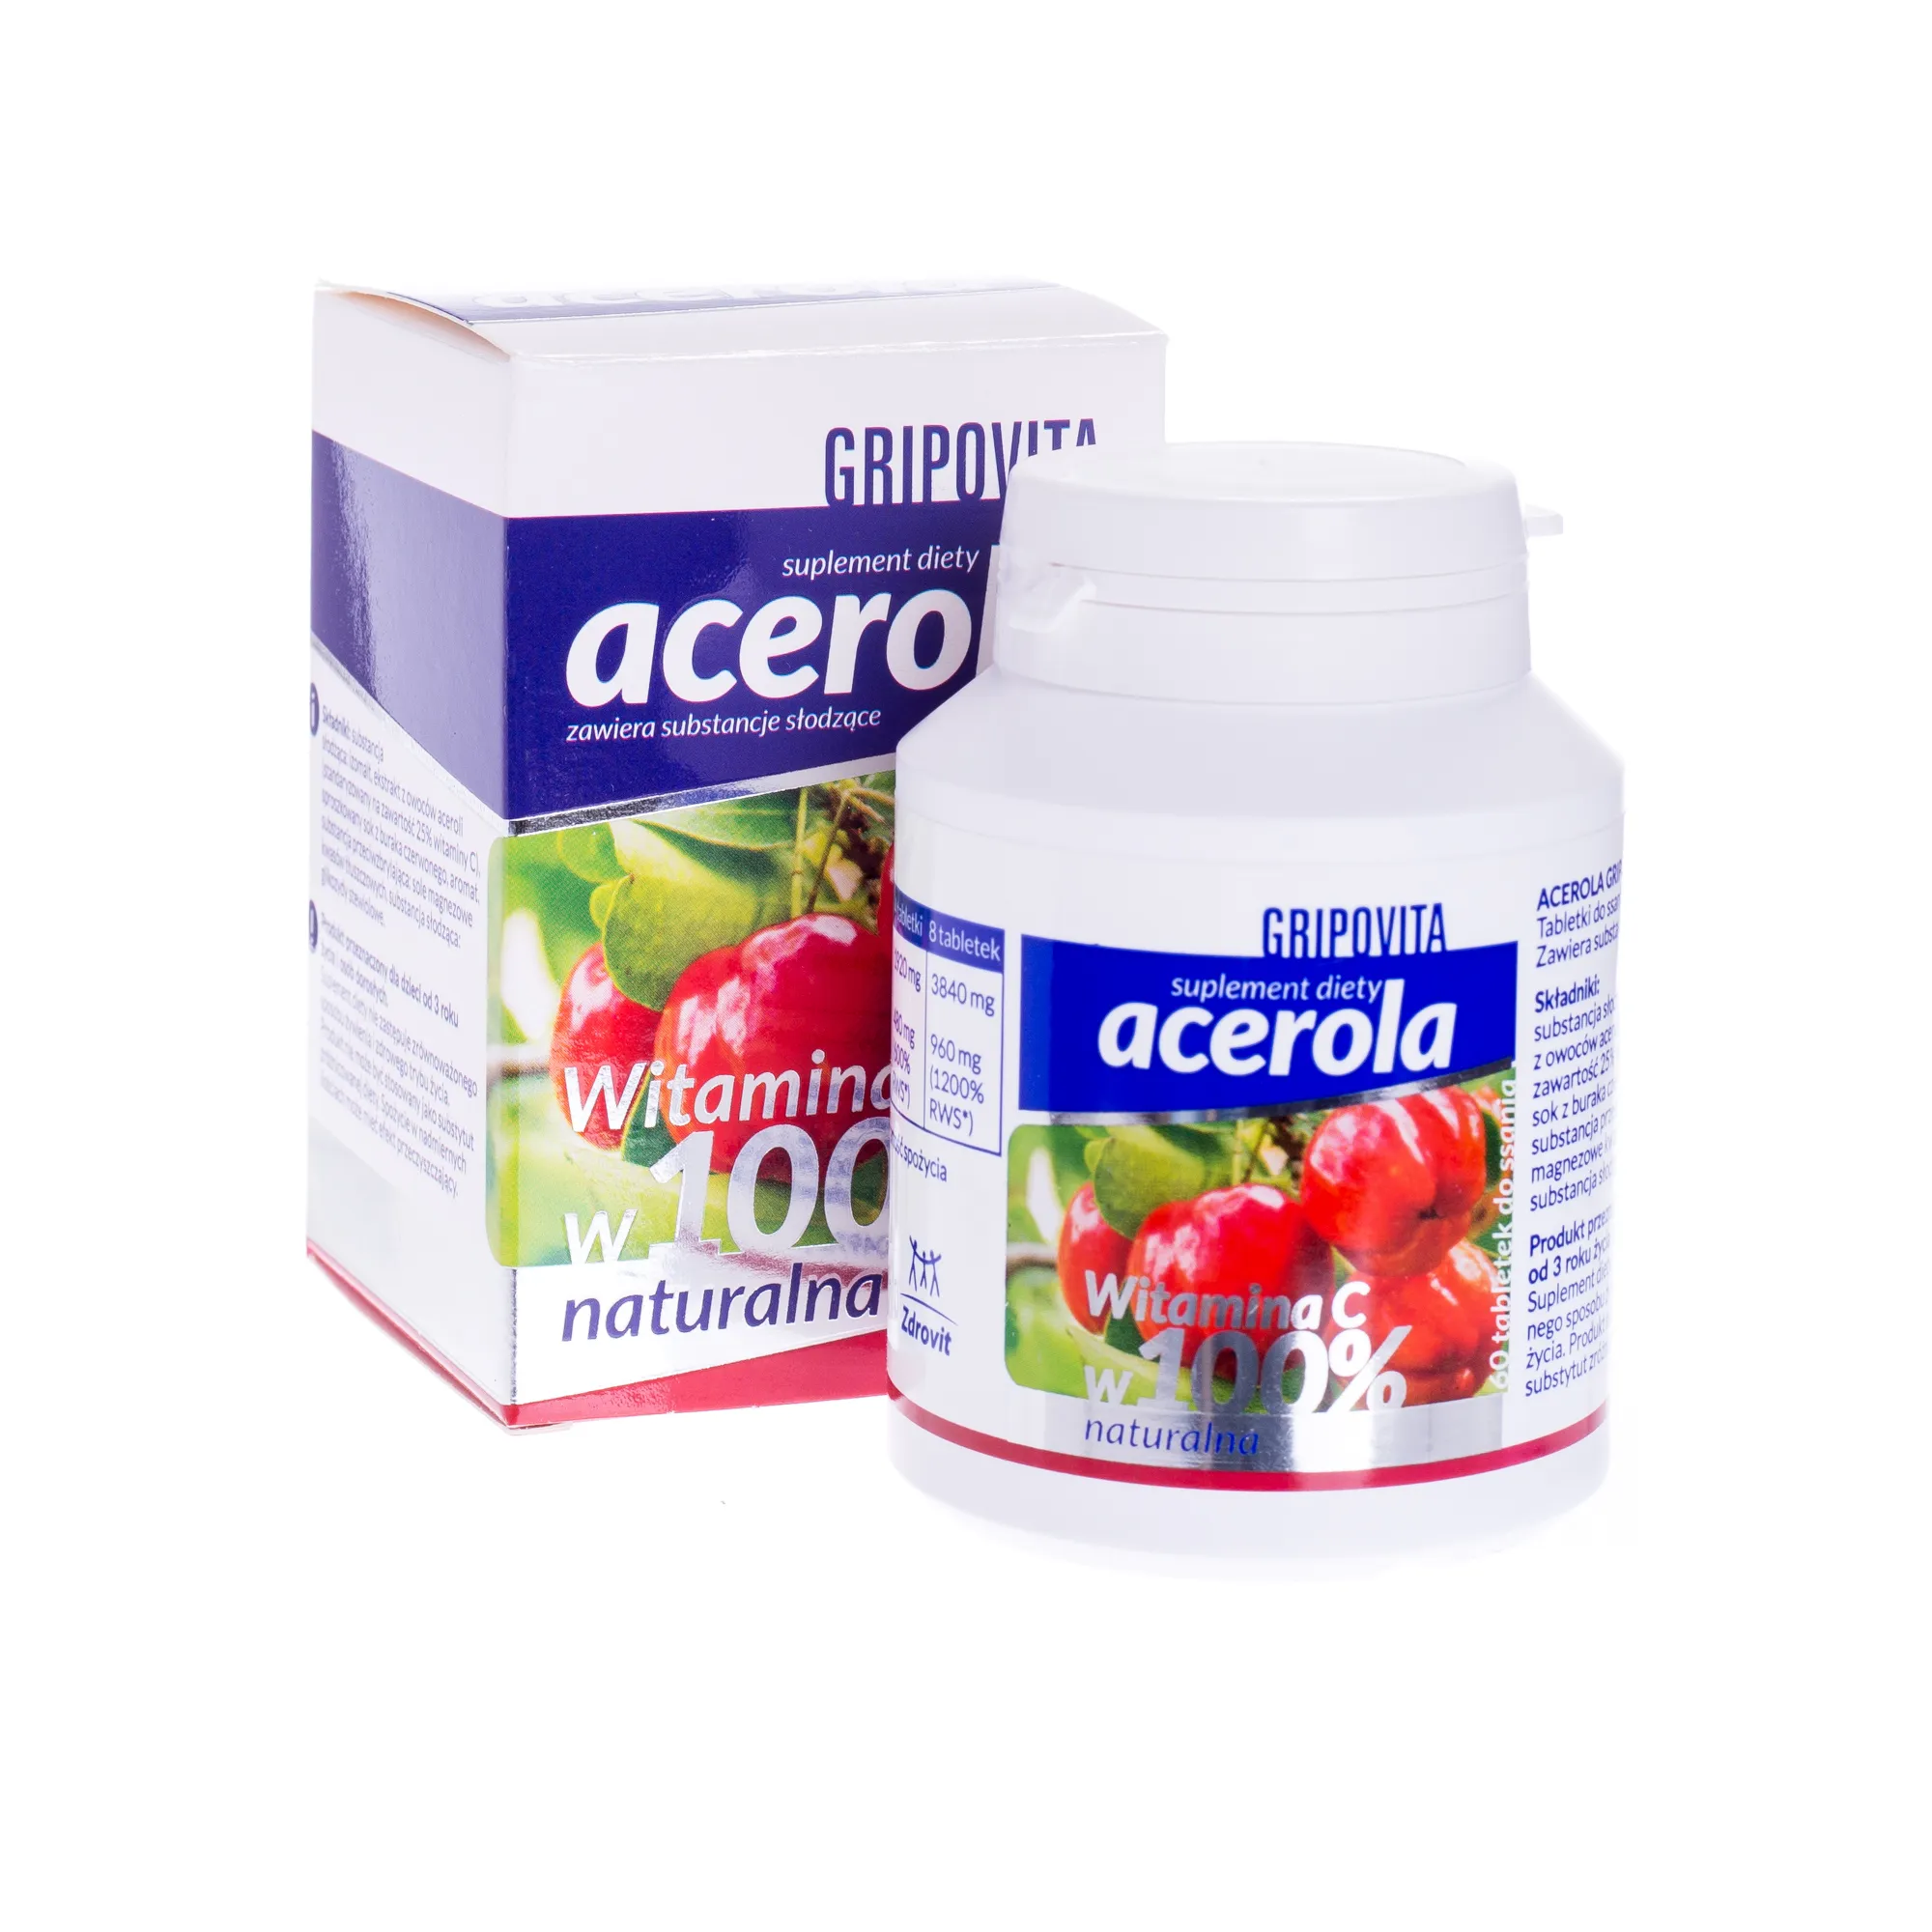 Acerola Gripovita, suplement diety, 60 tabletek do ssania